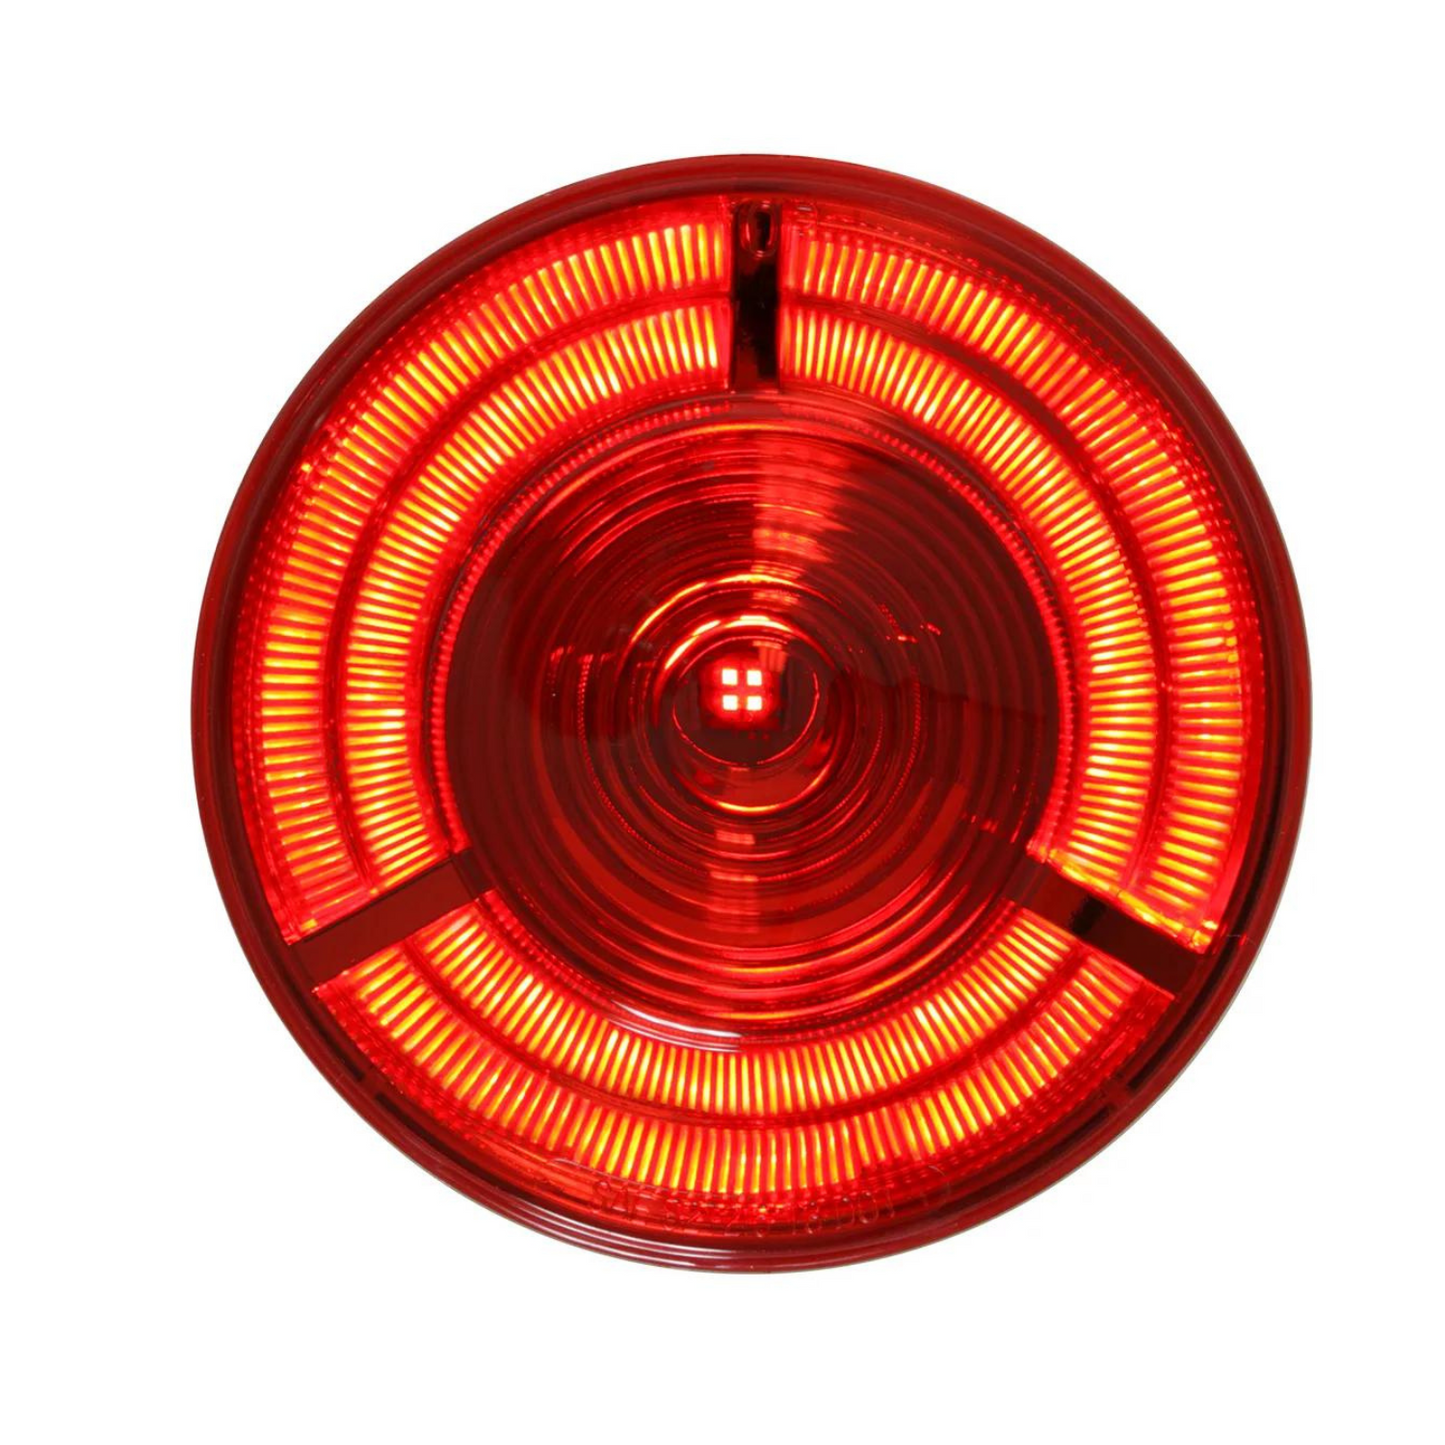 Prime 7 LED Light in Red